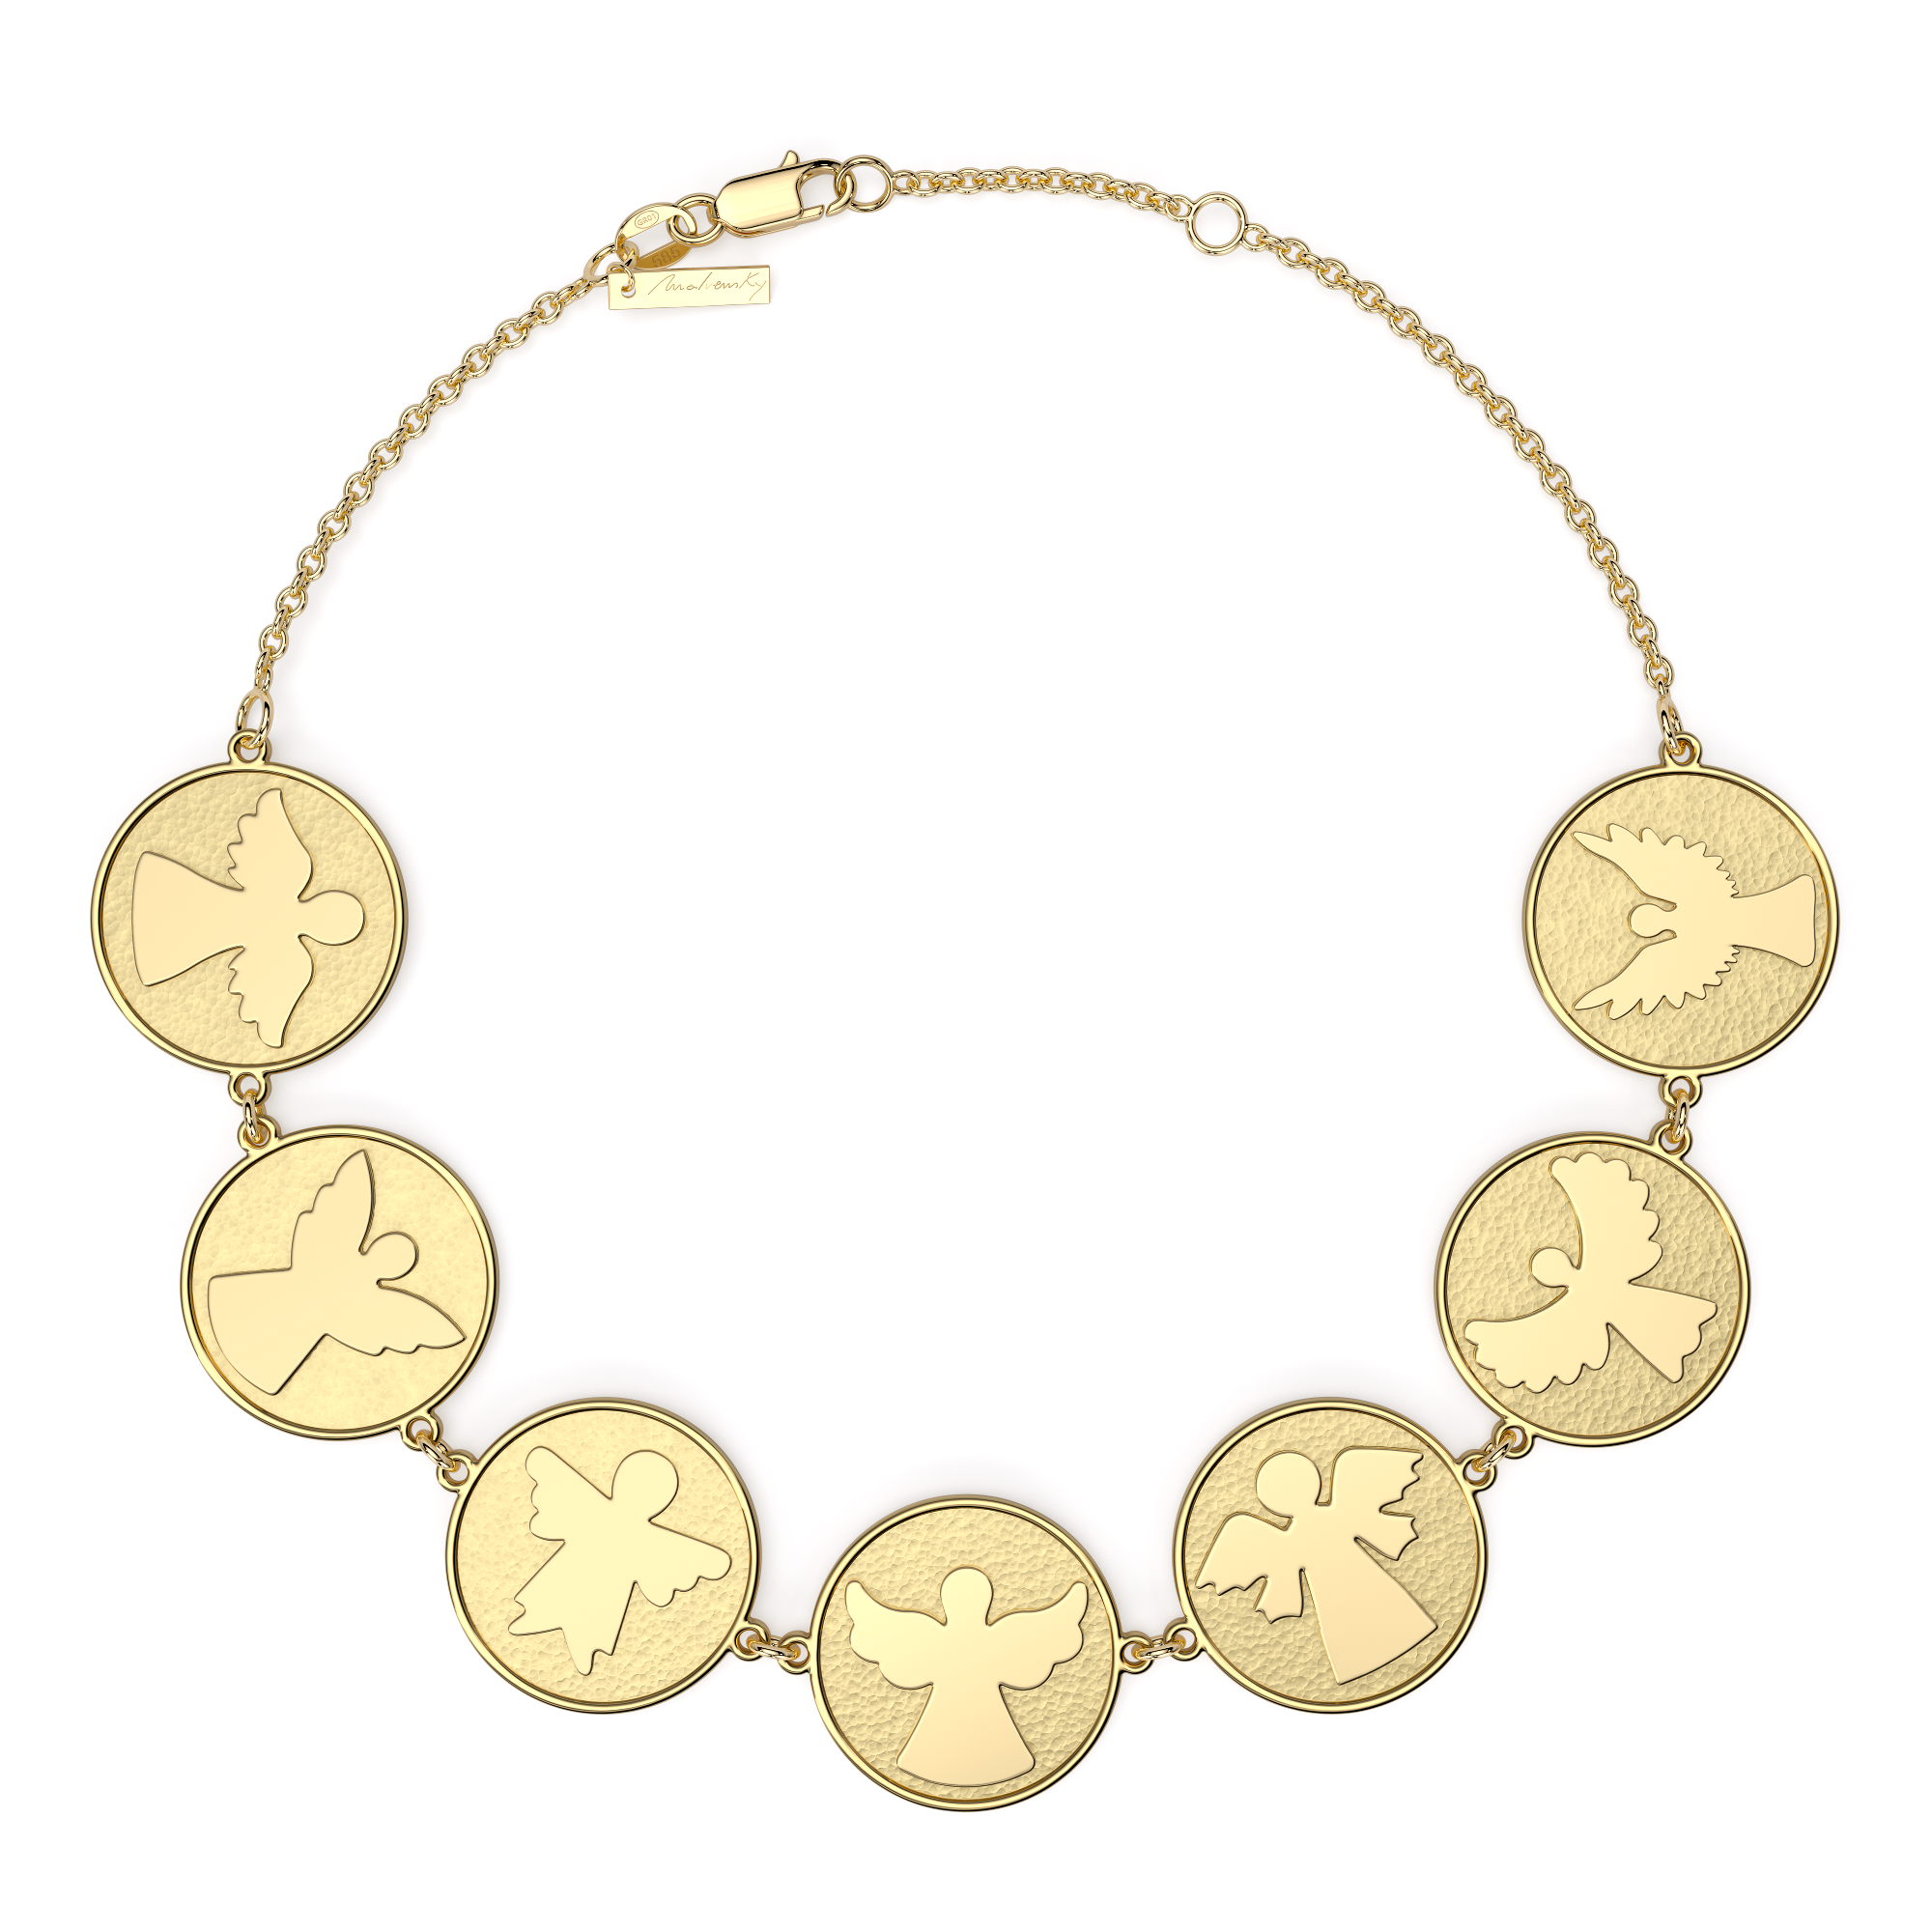 14 k yellow gold 7 Archangels on chain bracelet